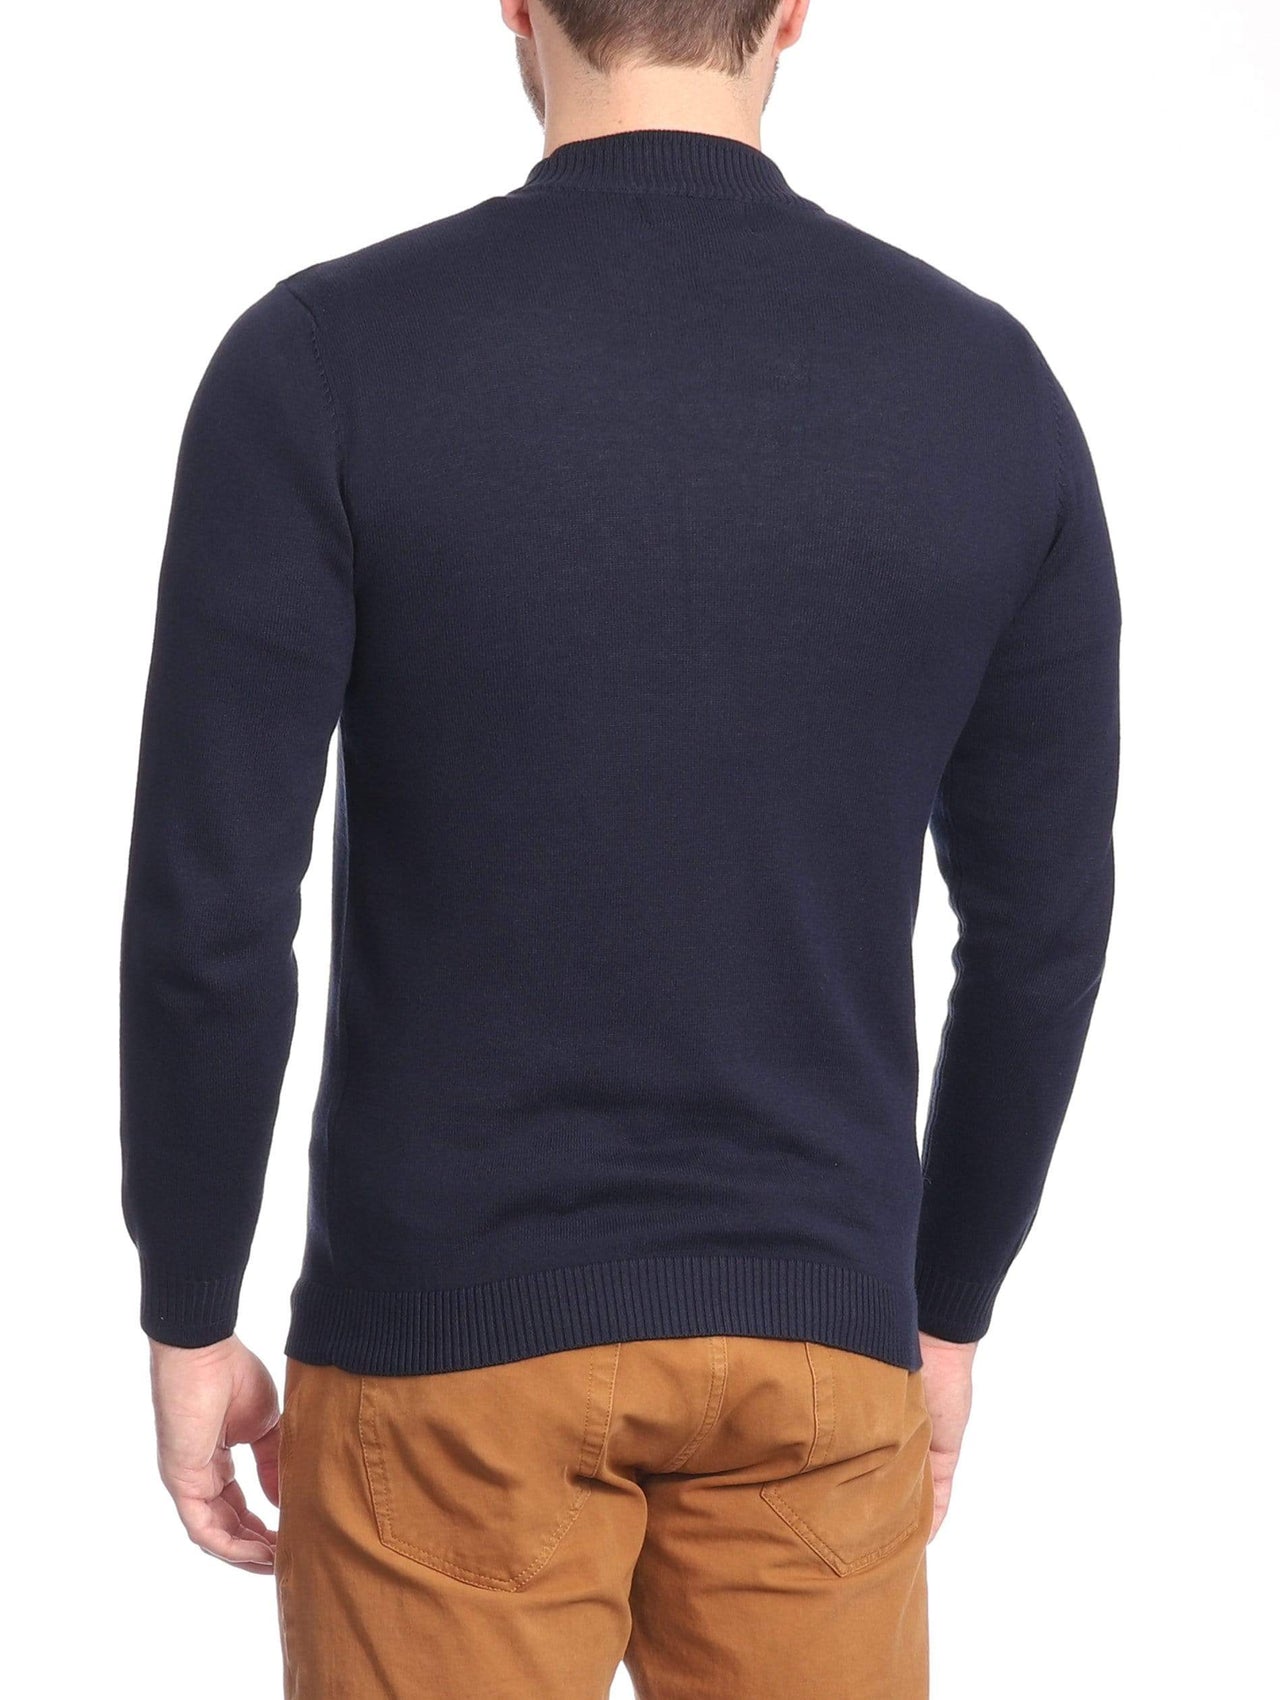 Arthur Black Default Category Migrated Arthur Black Men's Solid Navy Blue Pullover Cotton Blend Mock Neck Sweater Shirt